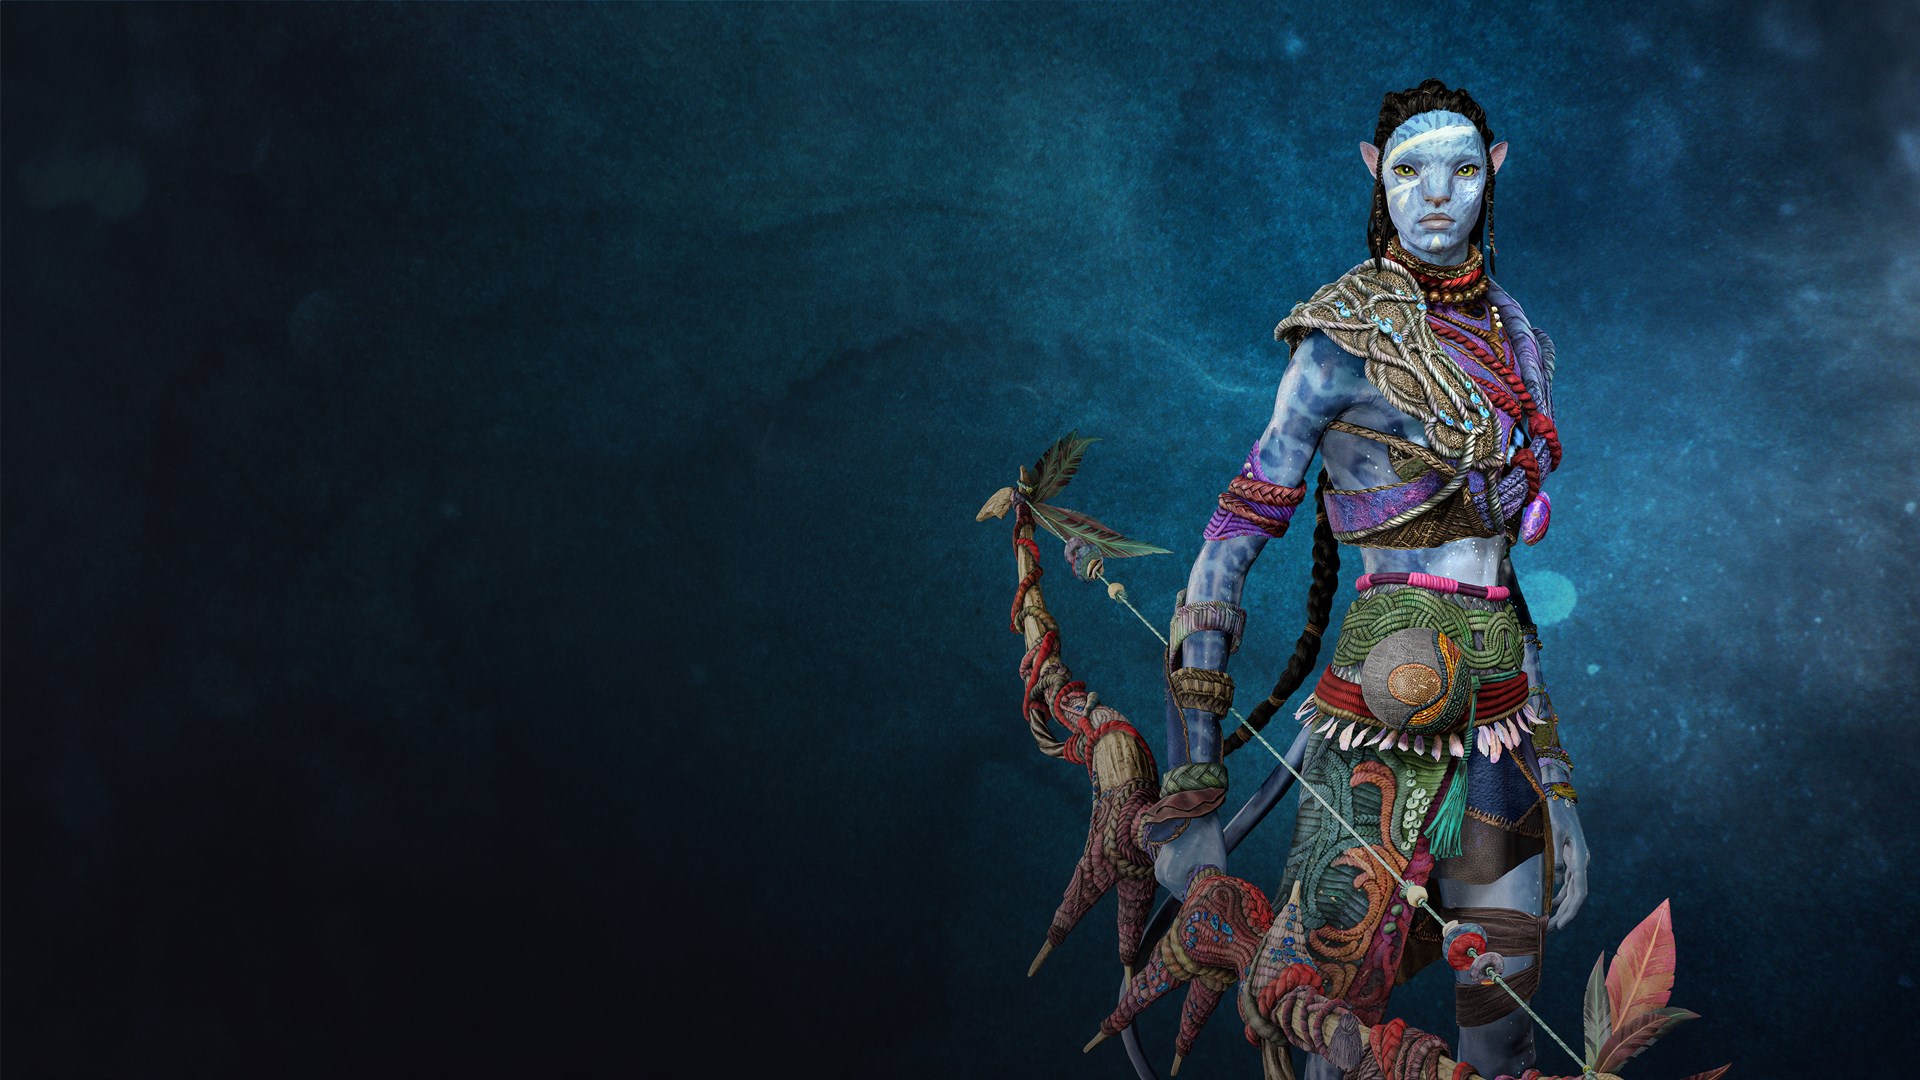 Avatar: Frontiers of Pandora Sarentu Hunter Equipment Pack